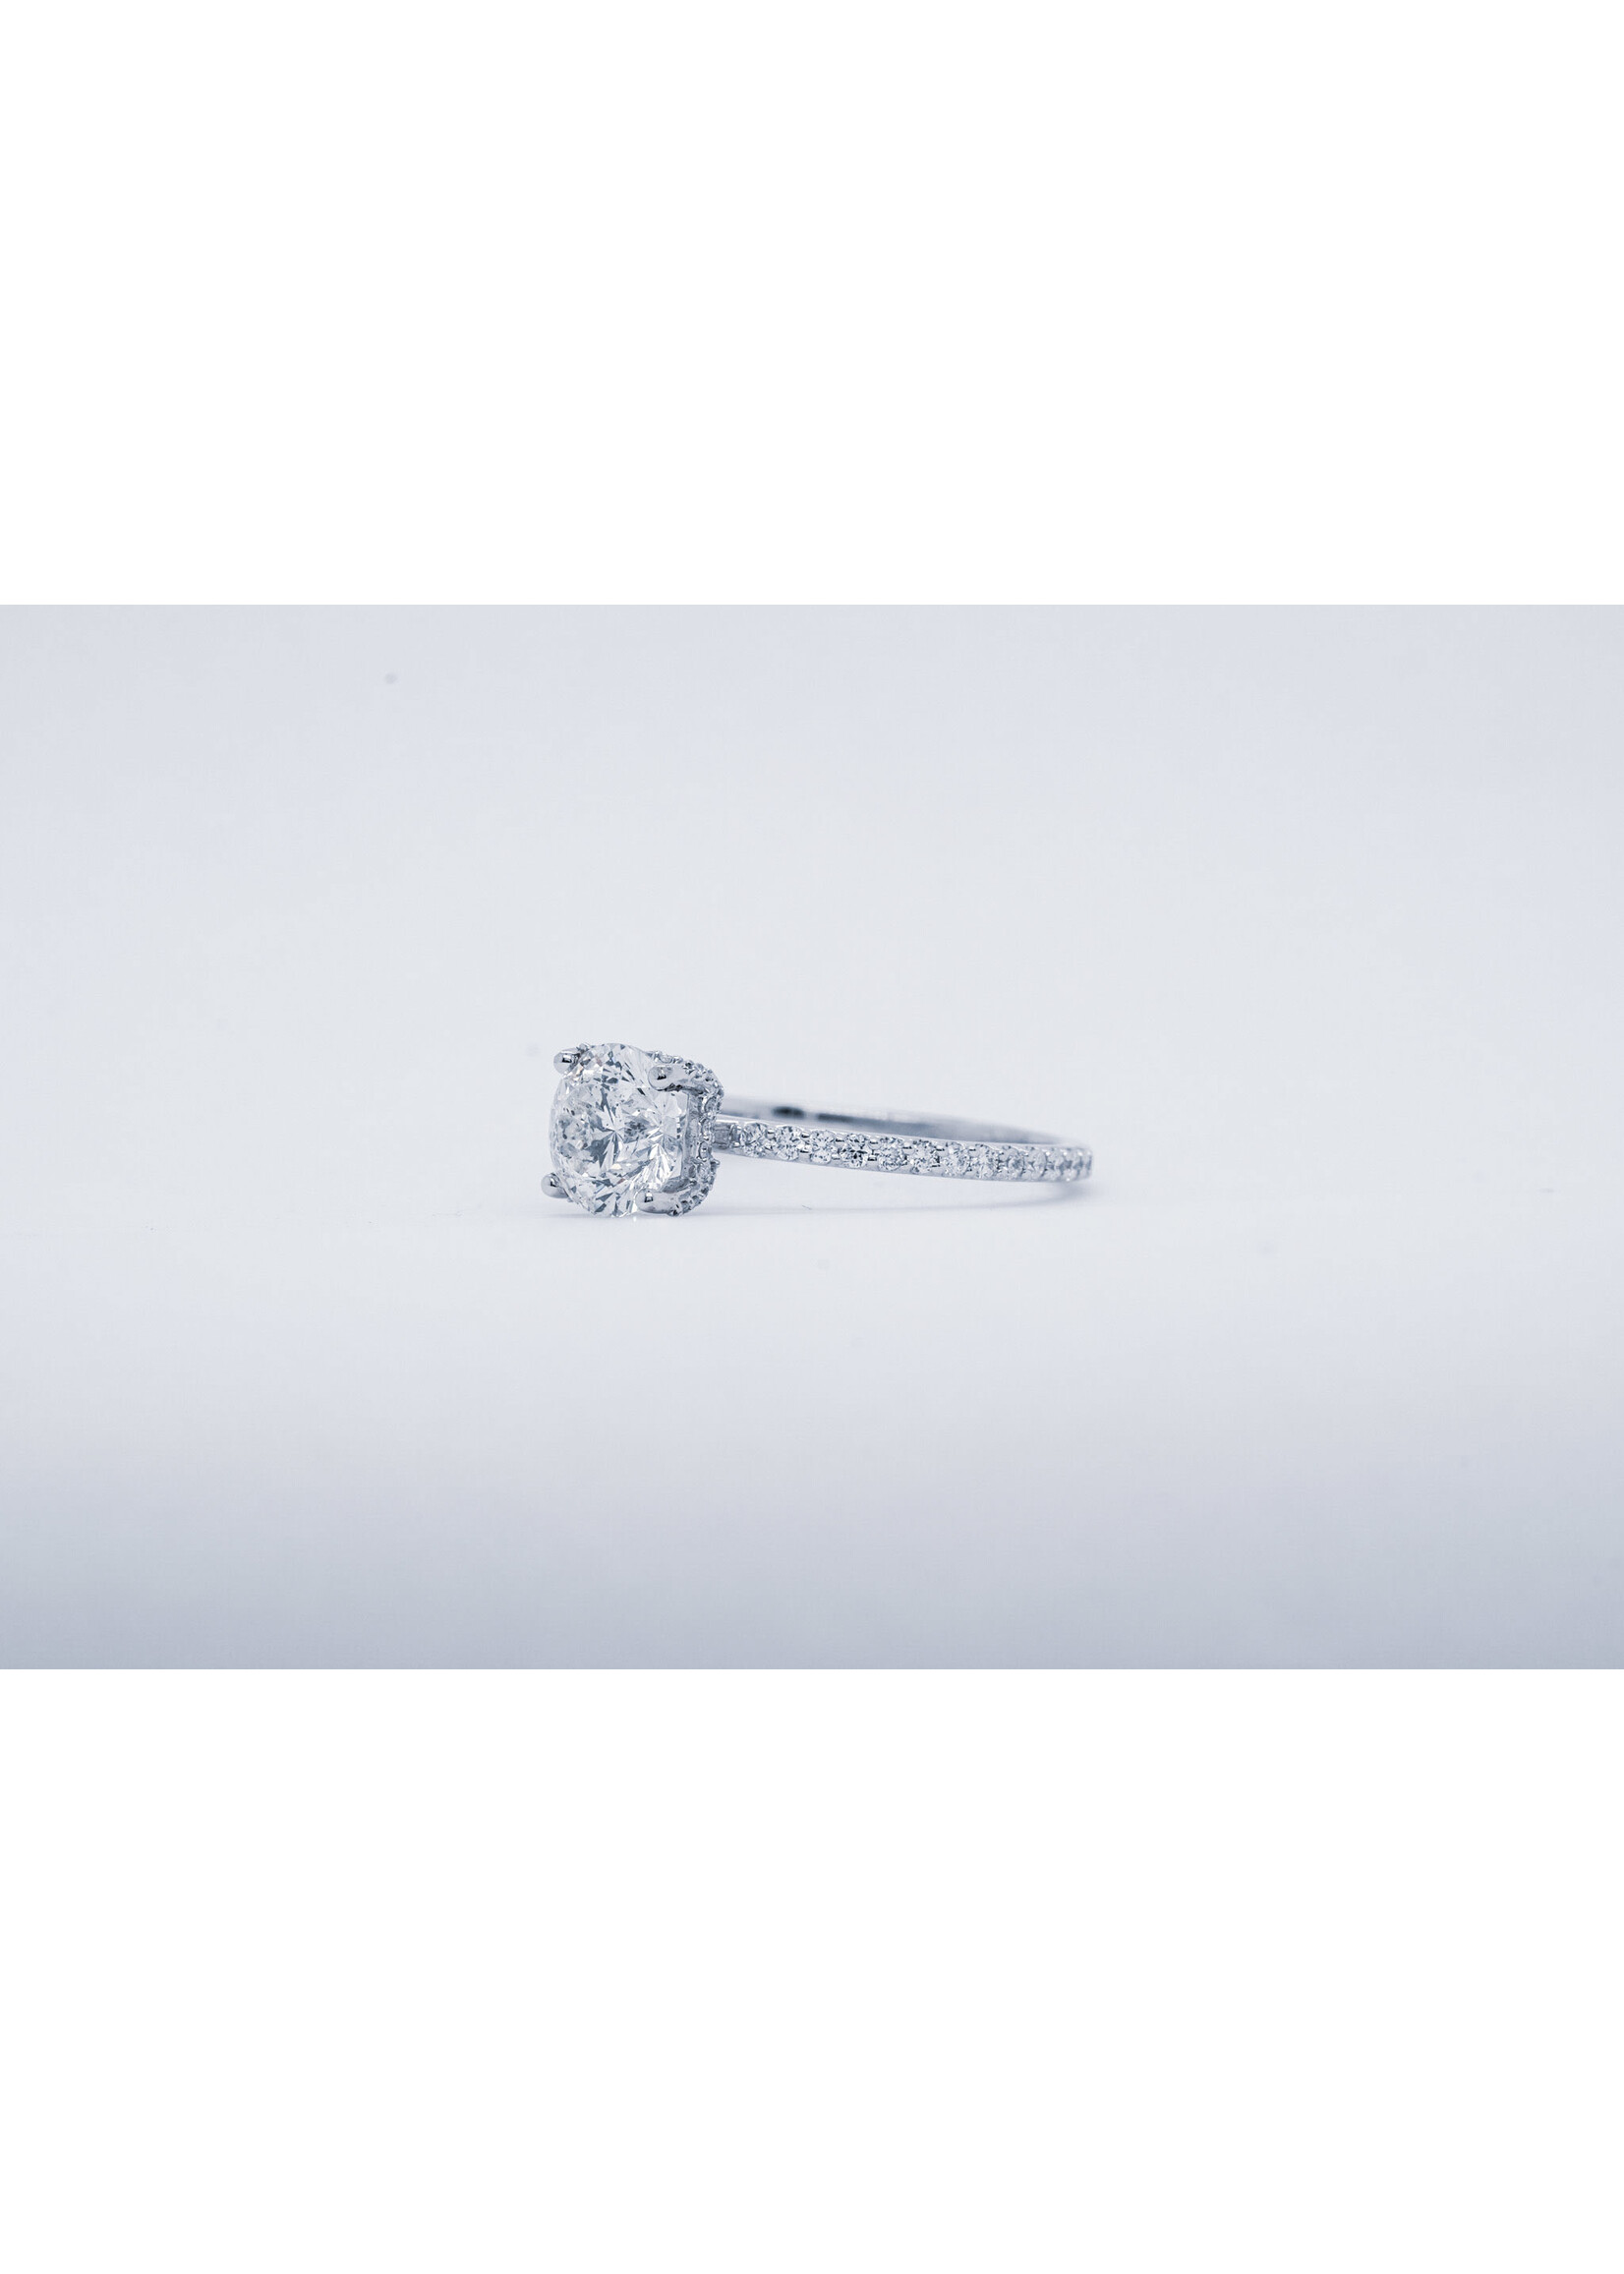 14KW 2.09g 1.81ctw (1.45ctr) G/SI2 Celebration Cut Diamond Engagement Ring (size 7)